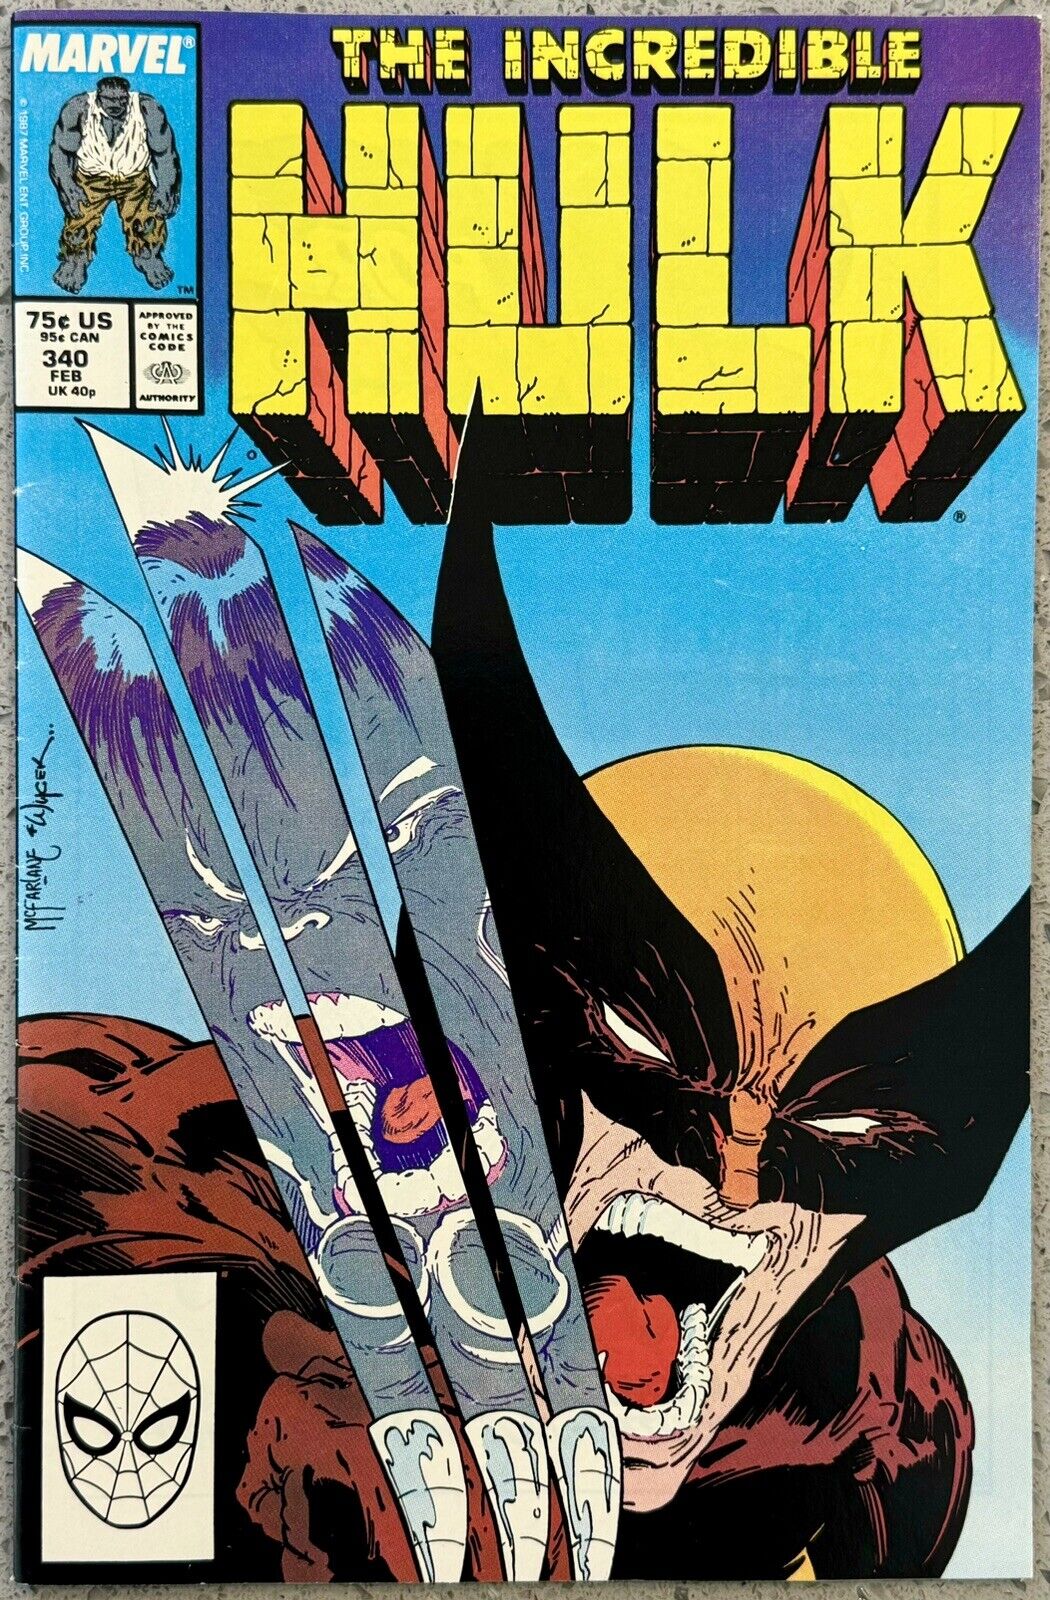 INCREDIBLE HULK #340 ☢️ Iconic Todd McFarlane Wolverine Cover Art SMASH SNIKT